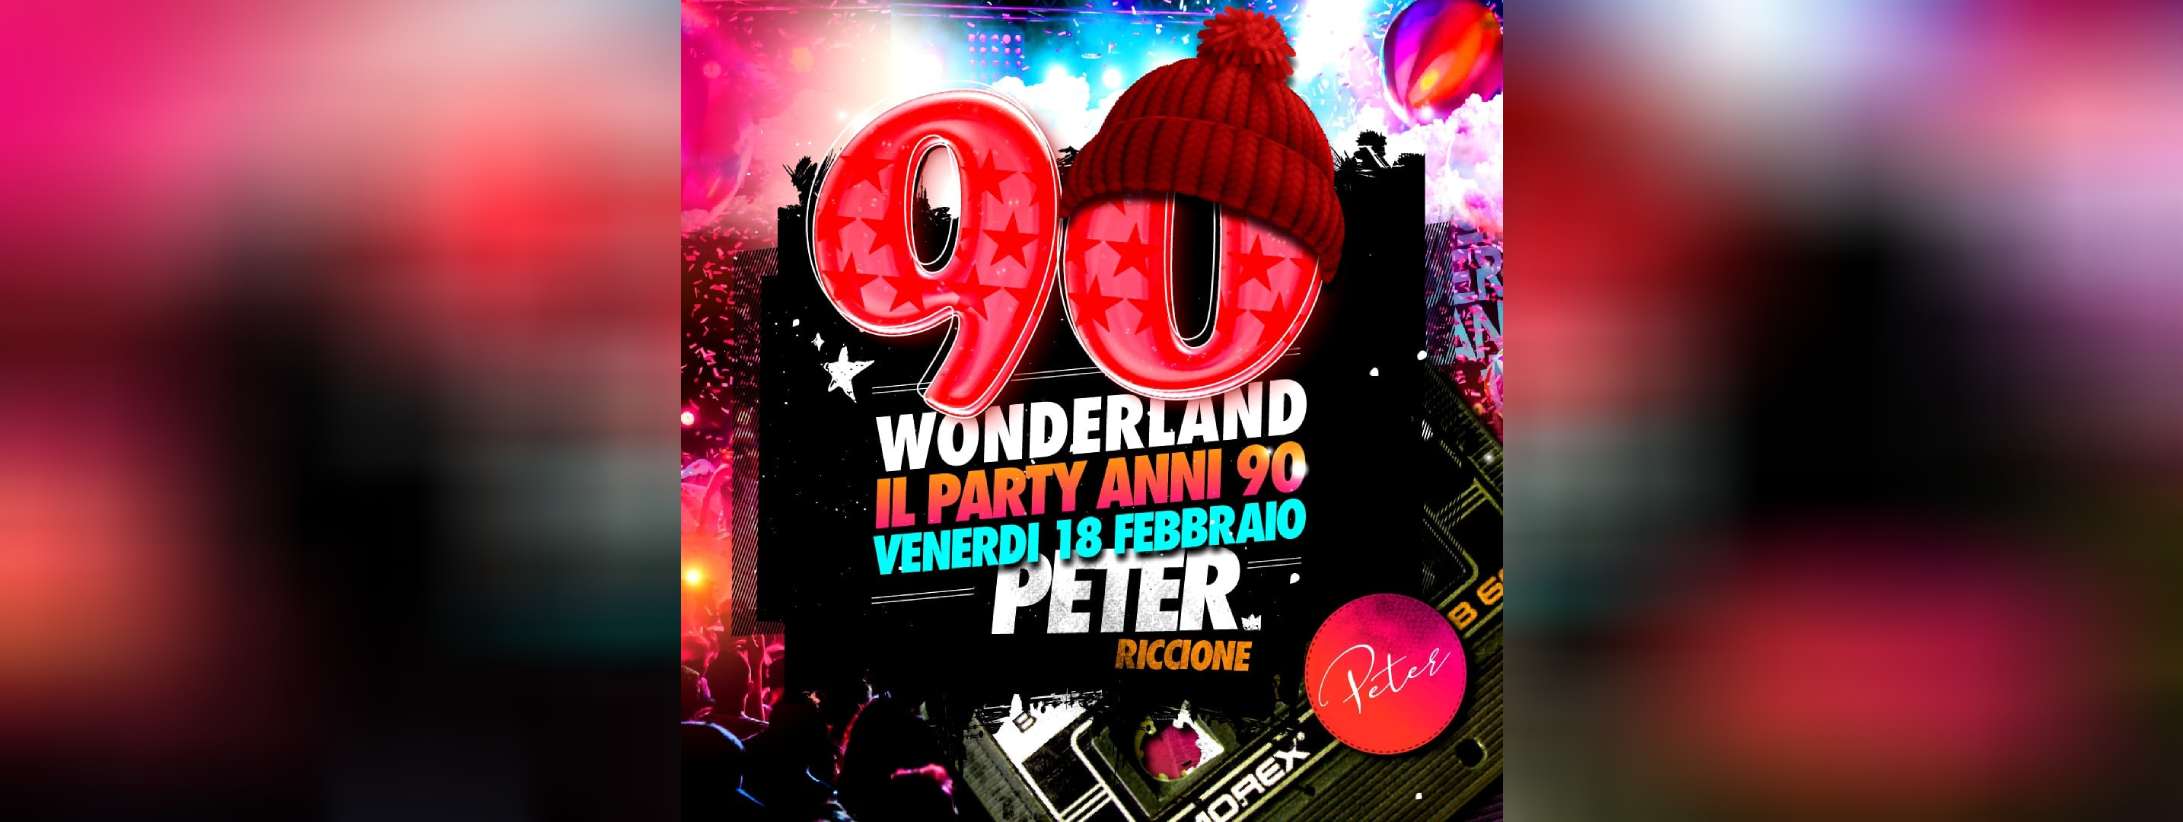 Peter Pan Riccione Venerdì 18 Febbraio 2022 90 Wonderlan